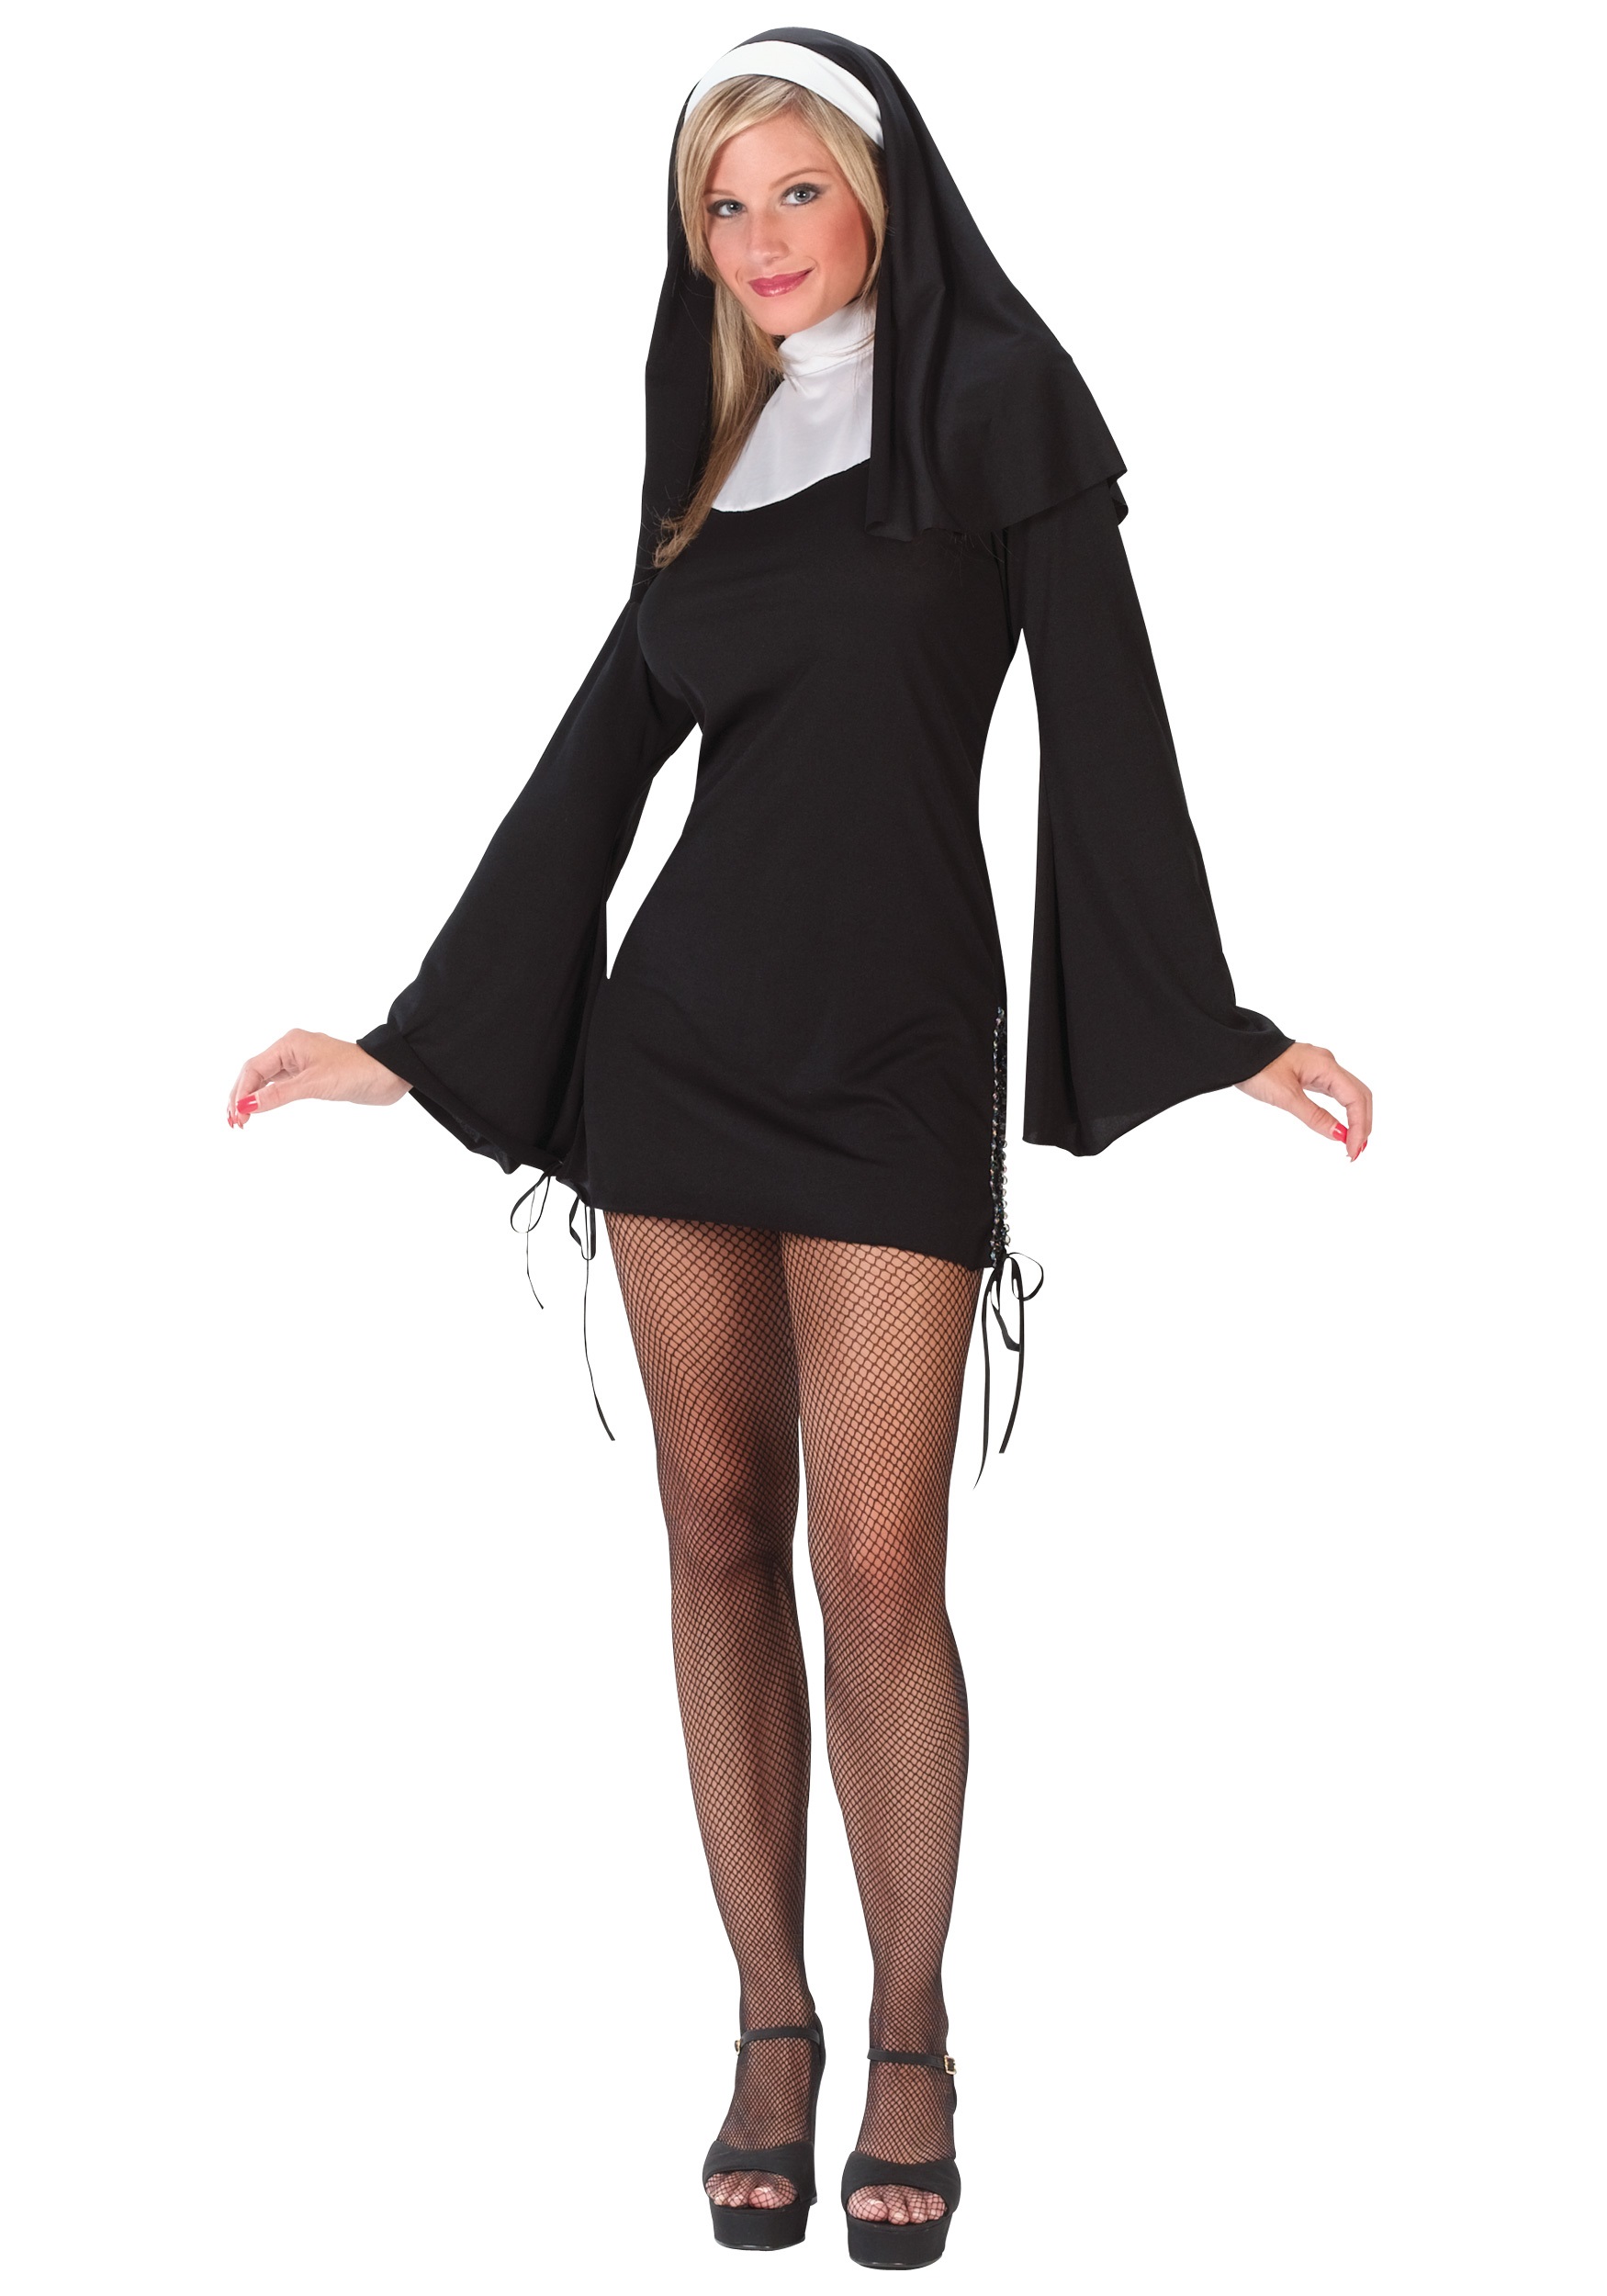 Women’s Naughty Nun Costume